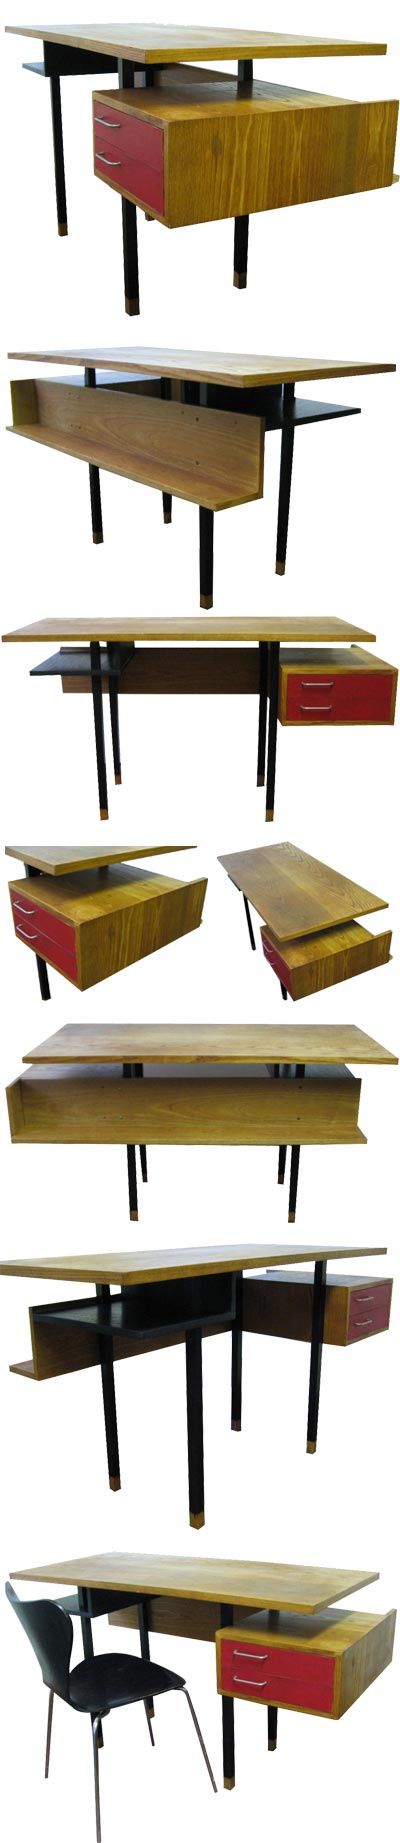 A Danish/Flemish desk,c1960. Reminiscent of  designs by Rietveld or Tapiovaara.